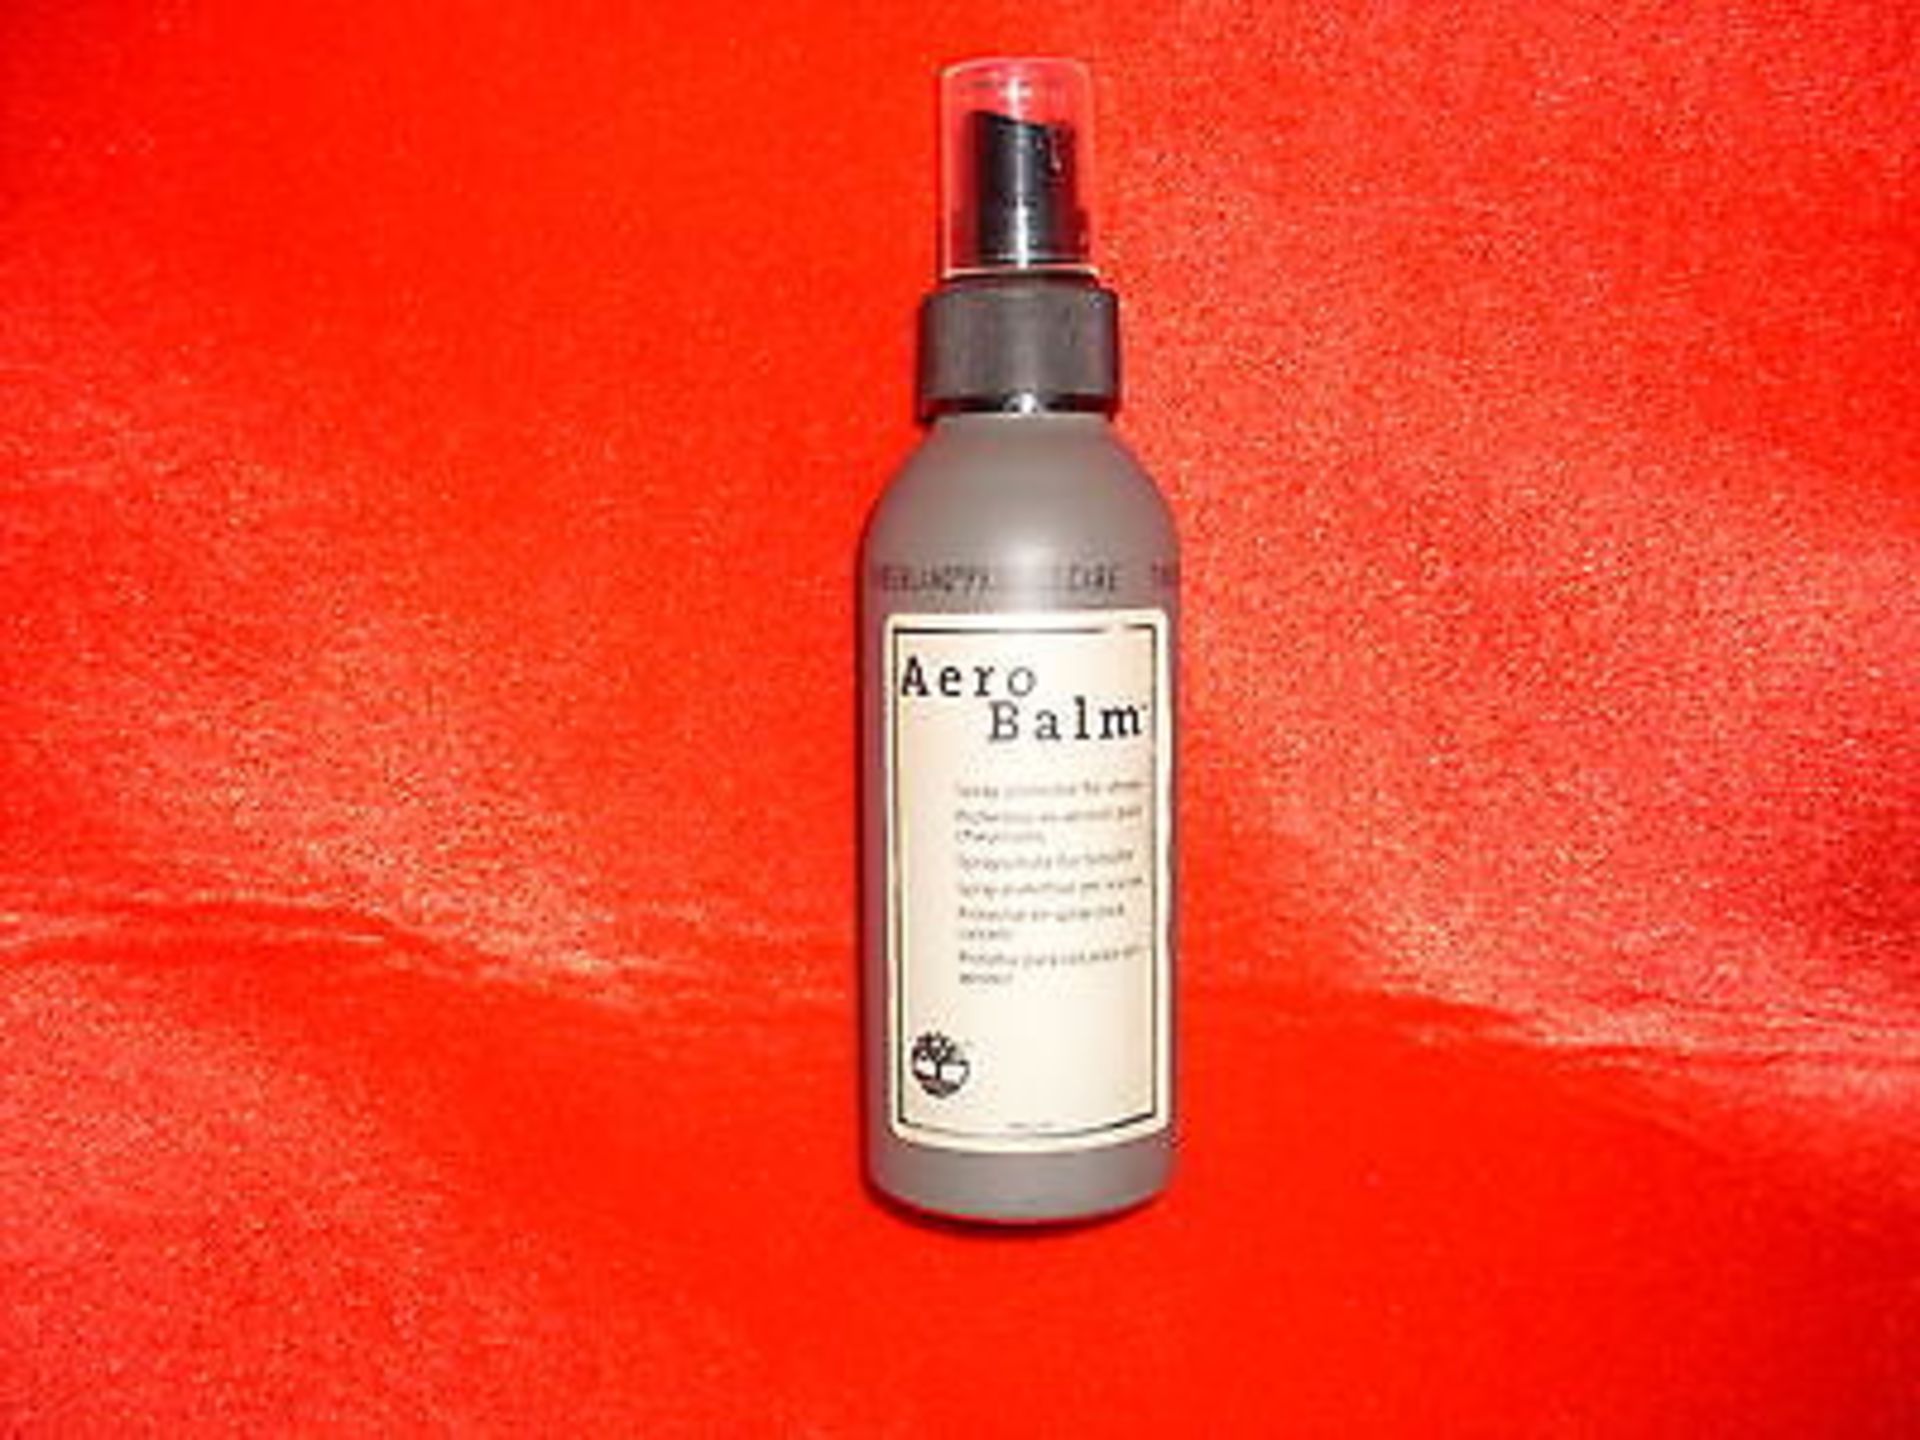 V Brand New Six 125ml Timerland High Quality Aero Balm Spray For Leather Care ISP 17.94 (Ebay)